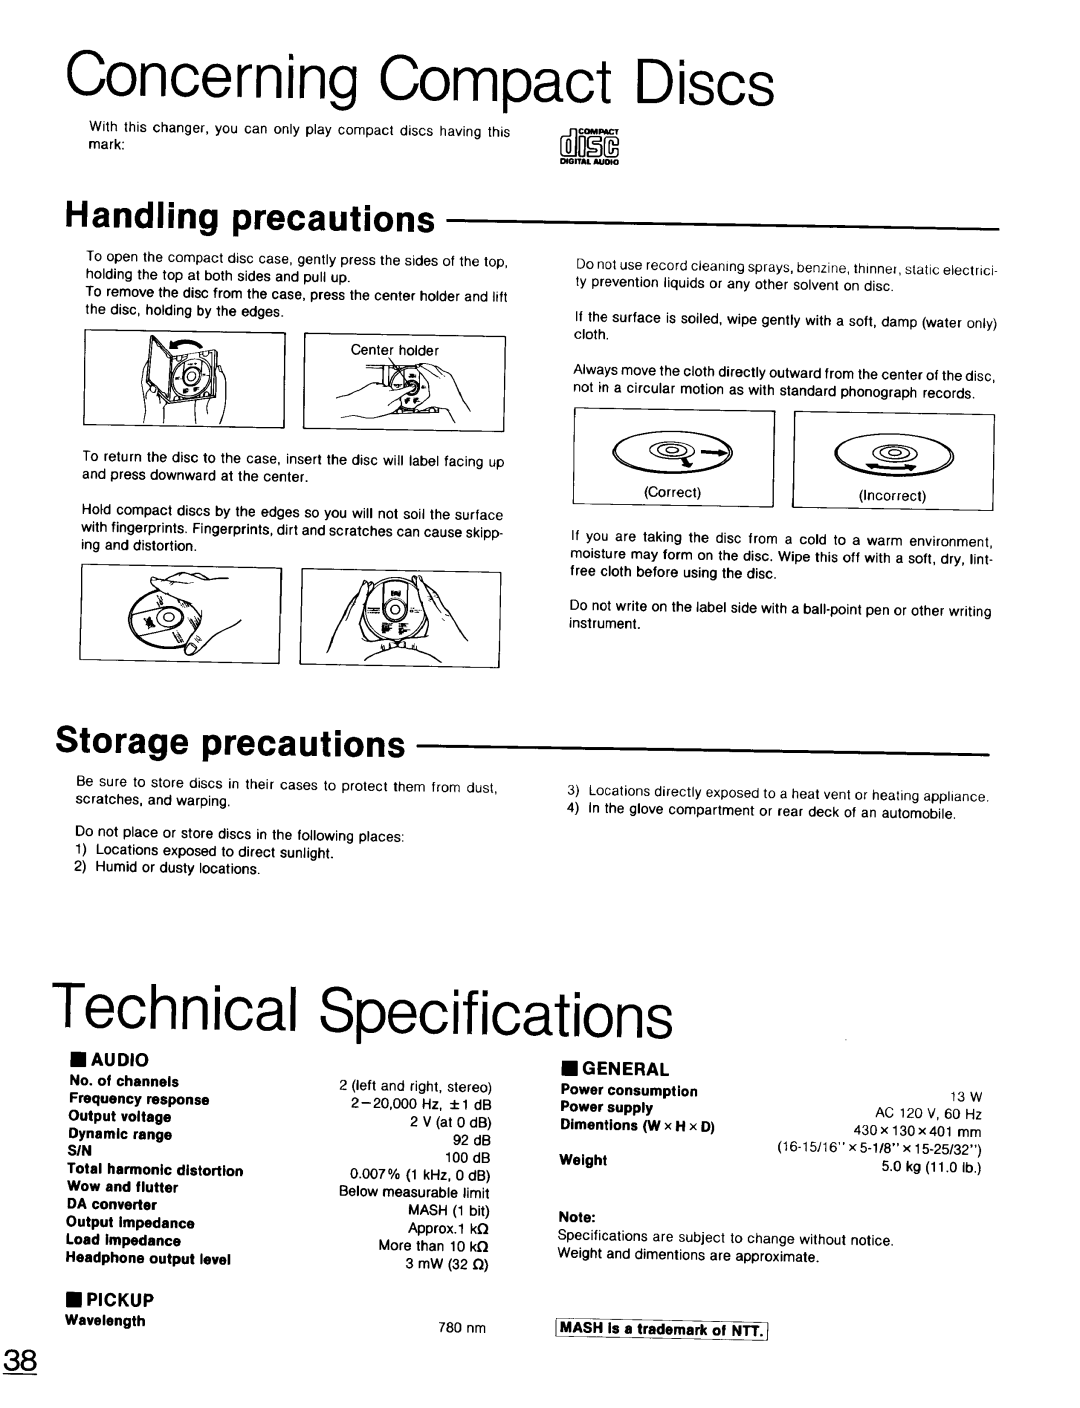 Technics SL-PD947 Concerning Compact Discs, Technical, Specifications, Handling precautions, Storage precautions, •Pickup 